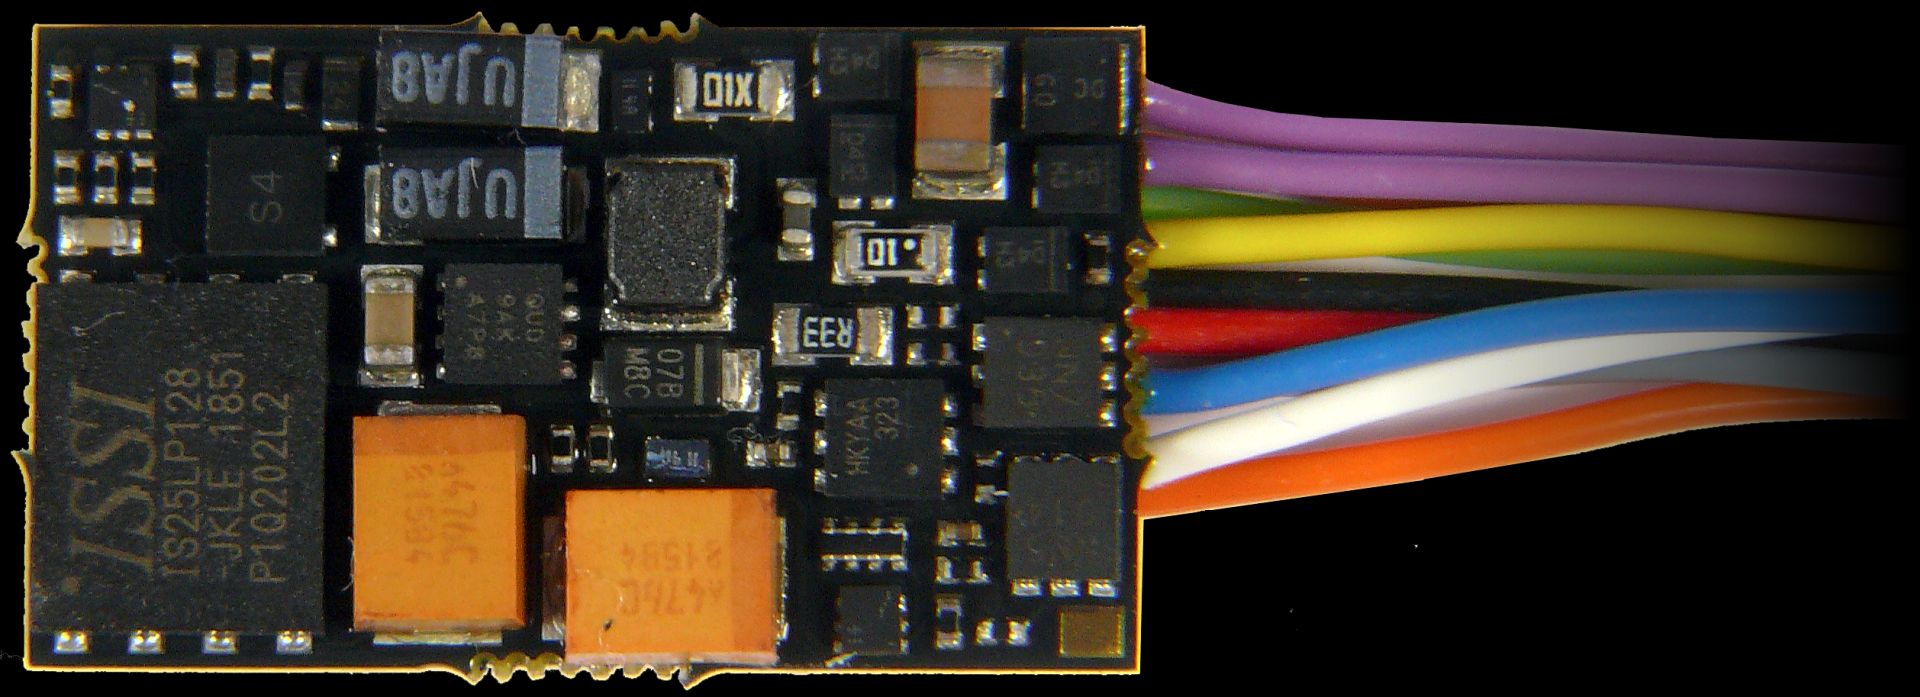 Zimo MS480 - Sounddecoder, 20x11x4mm, 1 W, 0,8 A, 11 offene Kabelenden